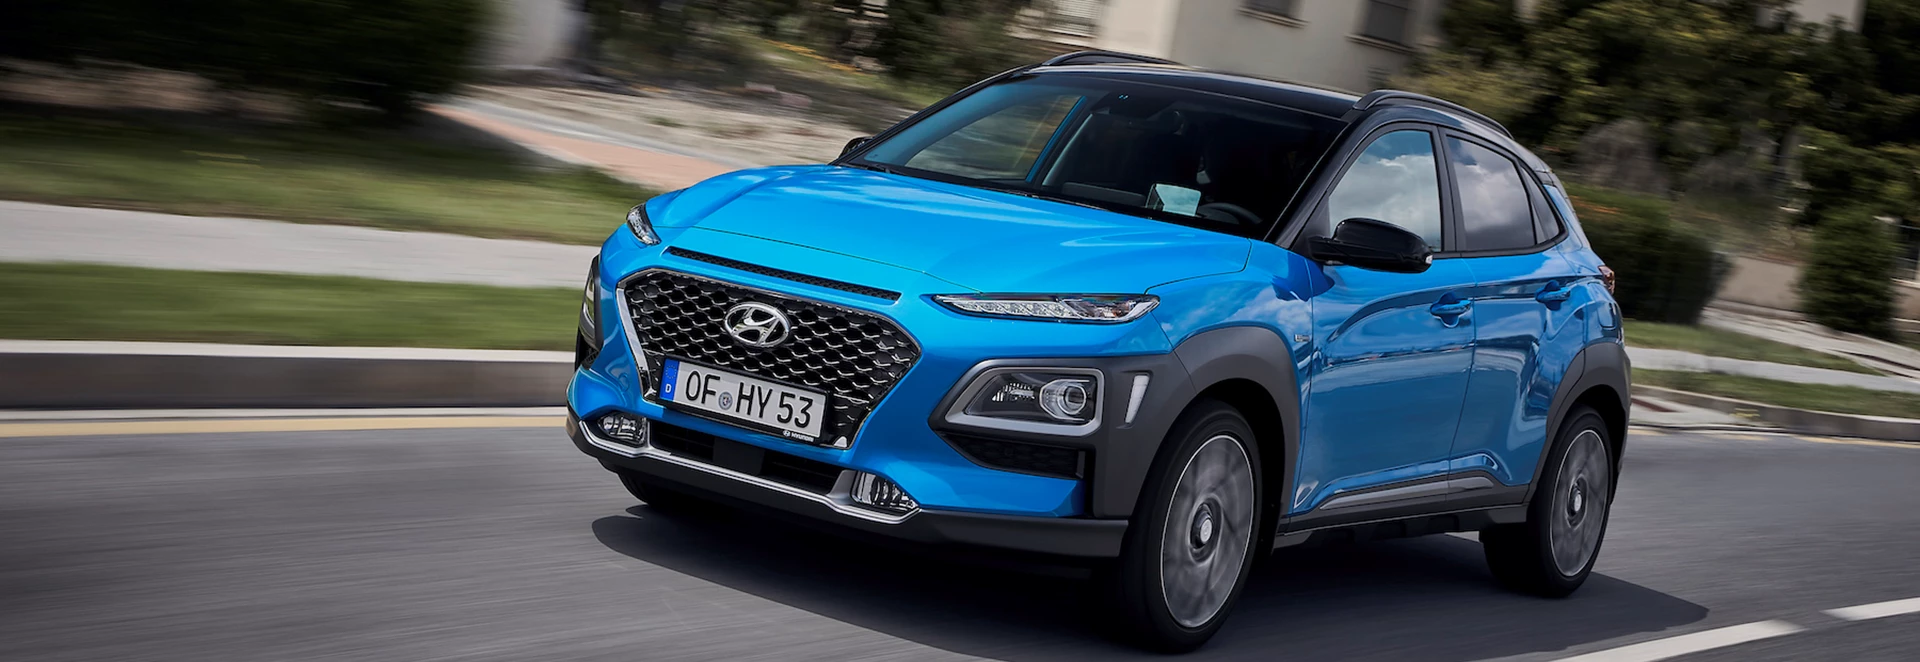 New 2019 Hyundai KONA Hybrid prices and specs confirmed